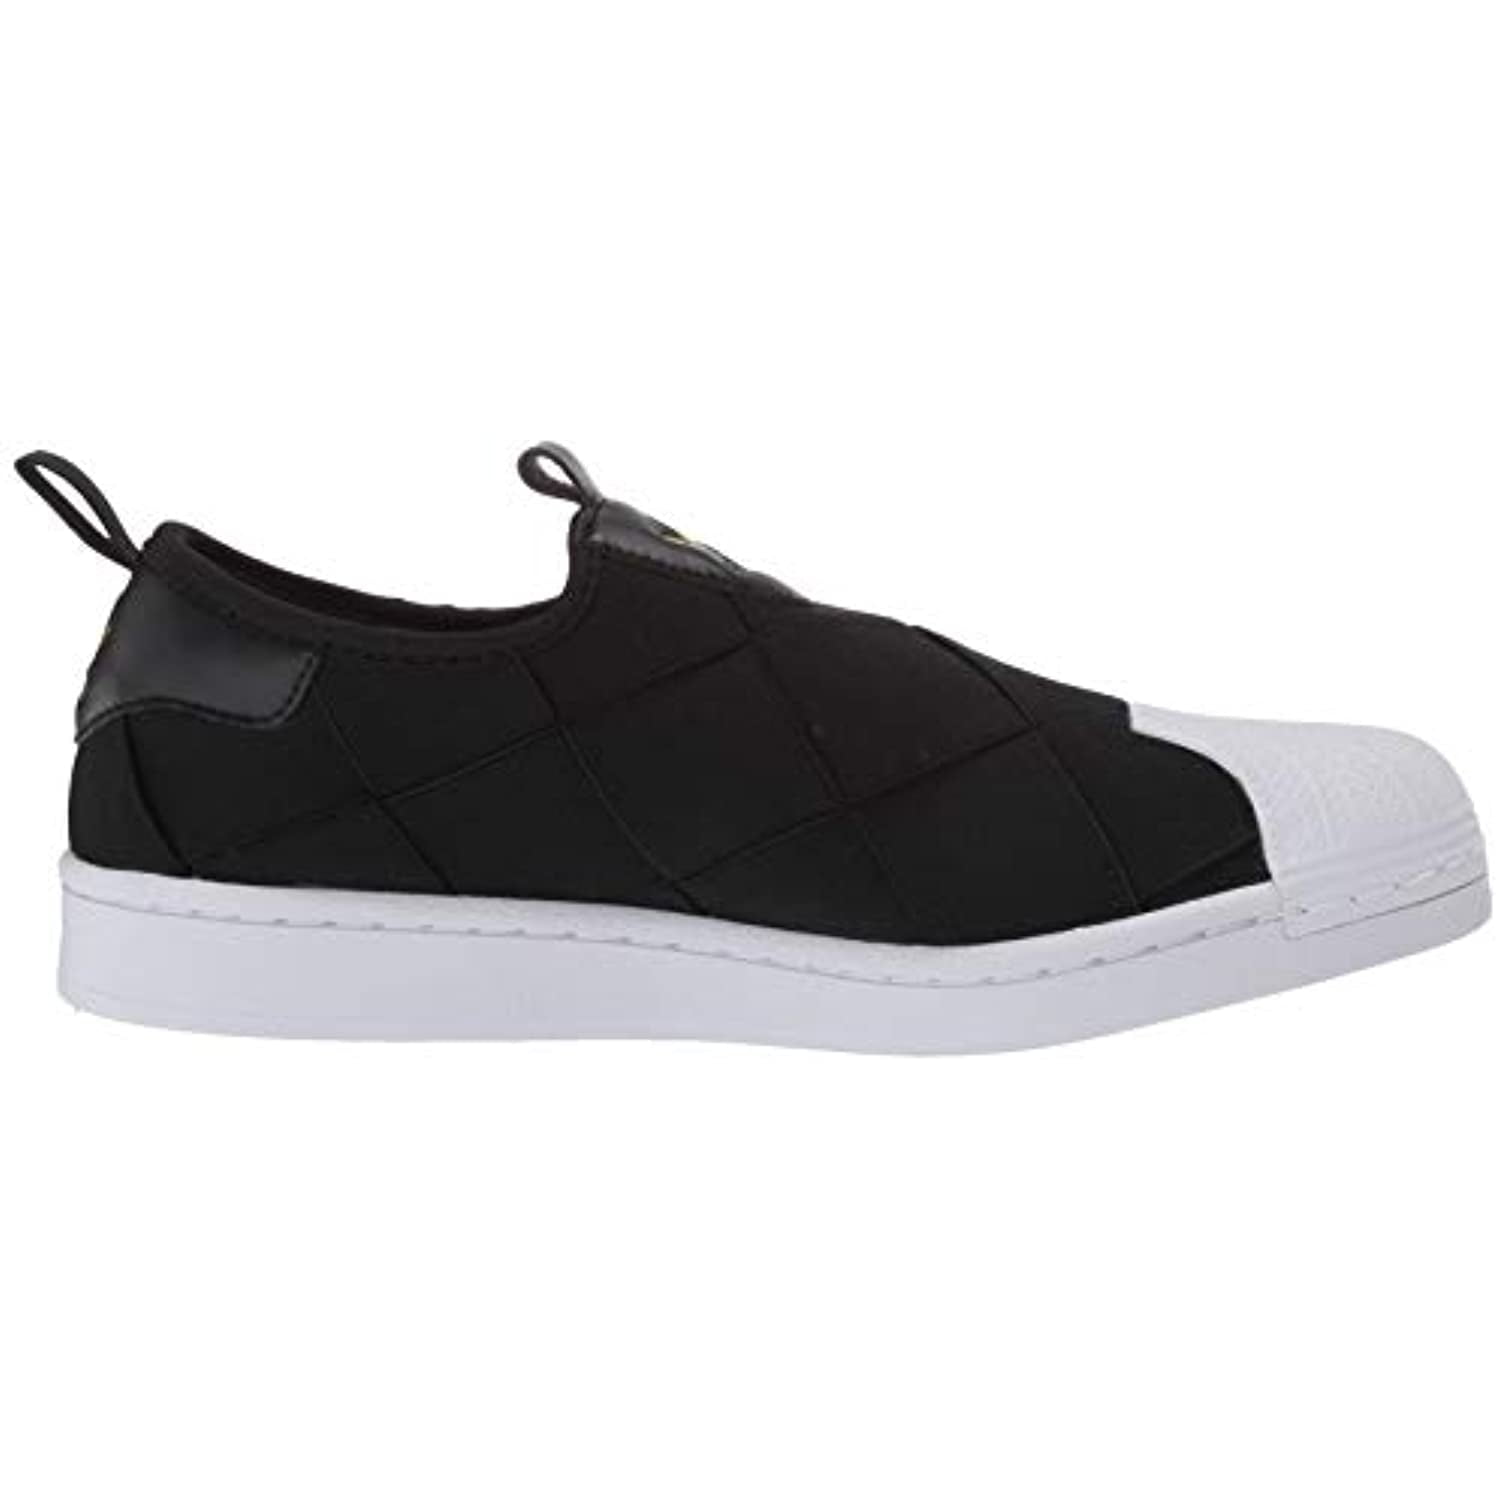 adidas Originals Women's Slip-On Shoes Sneaker, Black/White/Gold Metallic, - Walmart.com